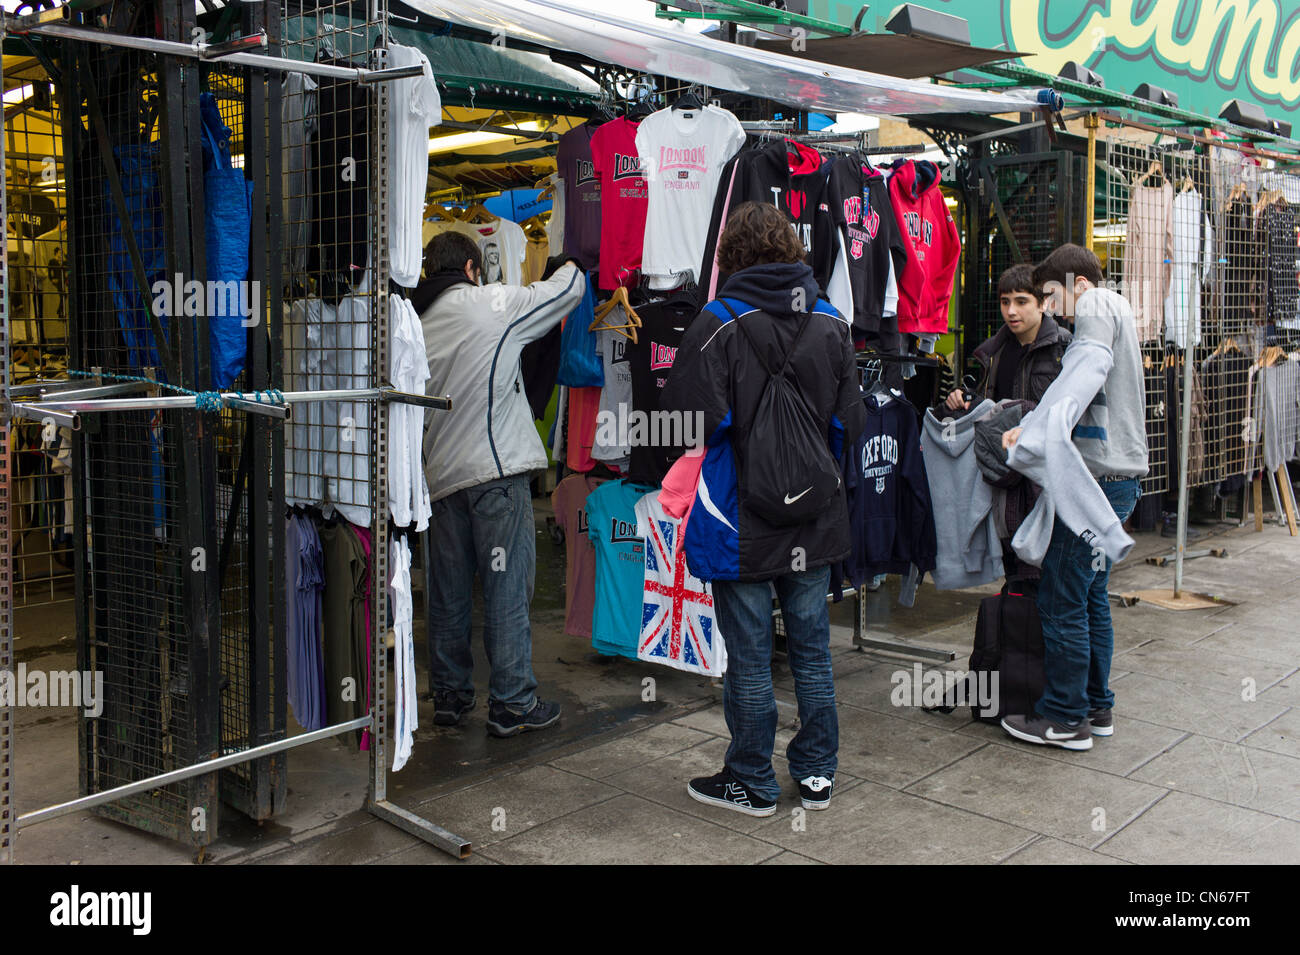 Shoppers, people buying cloths, Camden Market, Camden High Street, London England Stock Photo